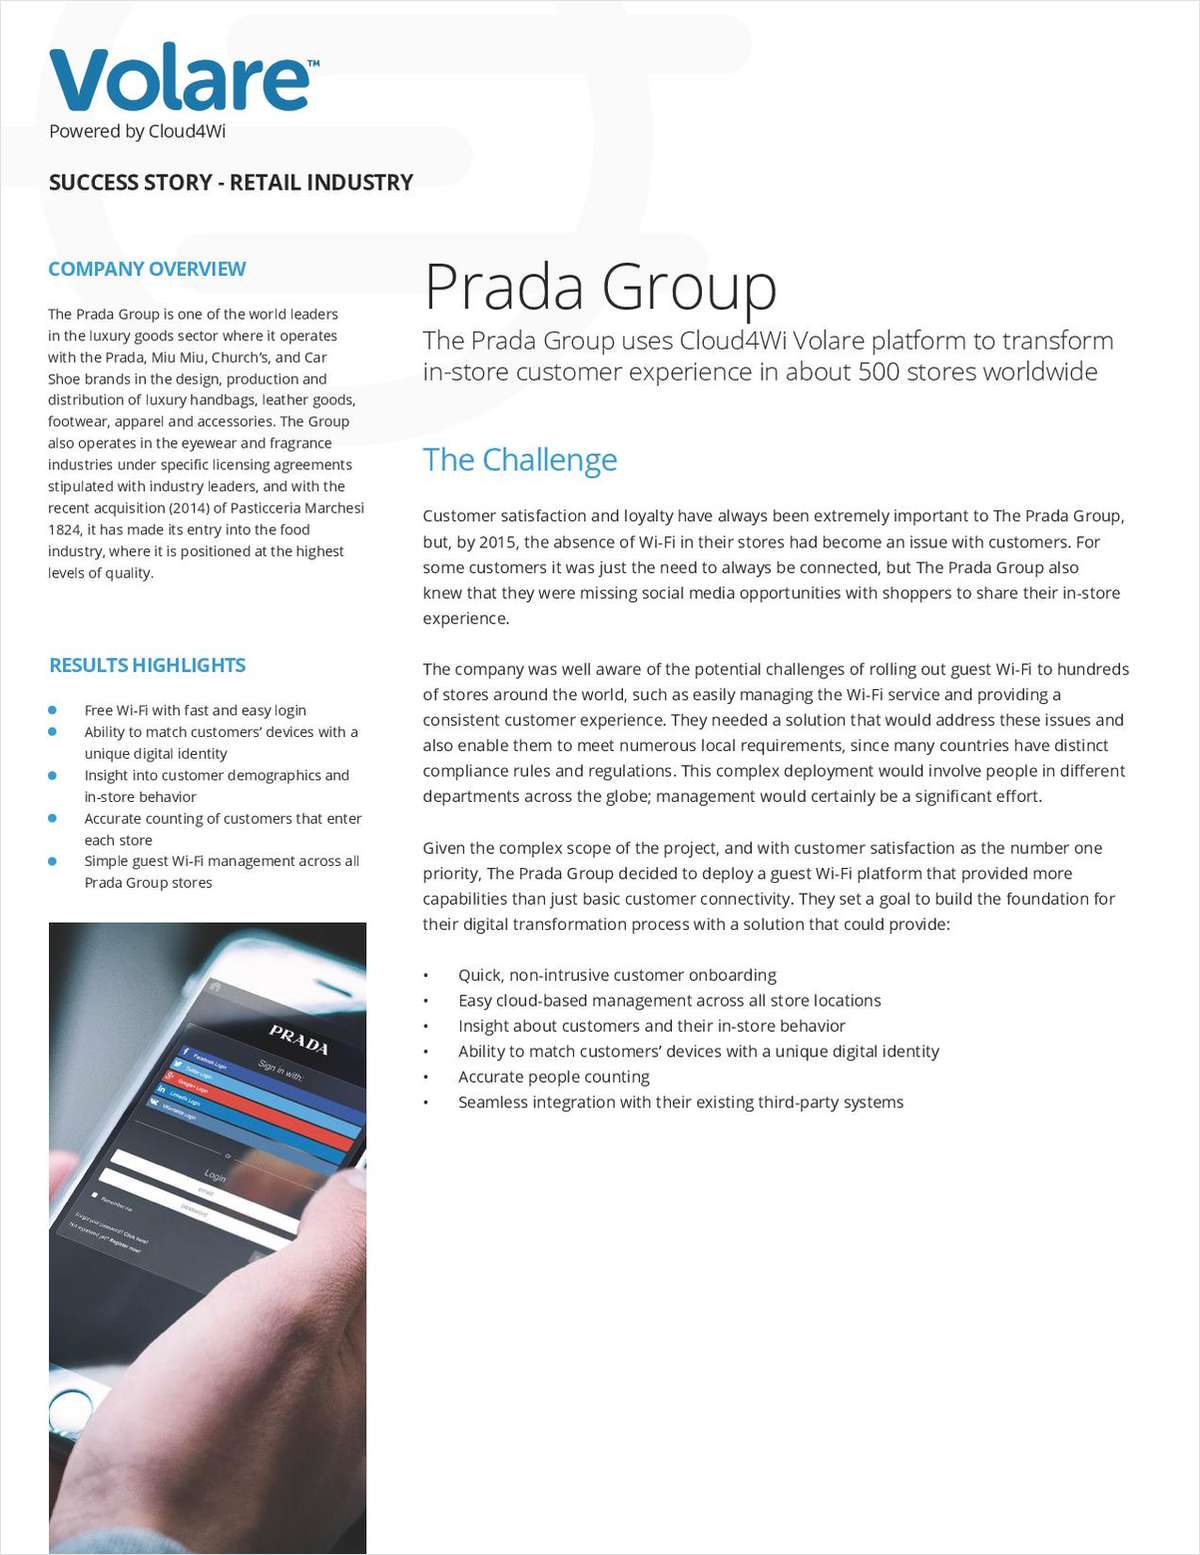 Revolutionizing In-Store Customer Experience: Prada Group Success Story